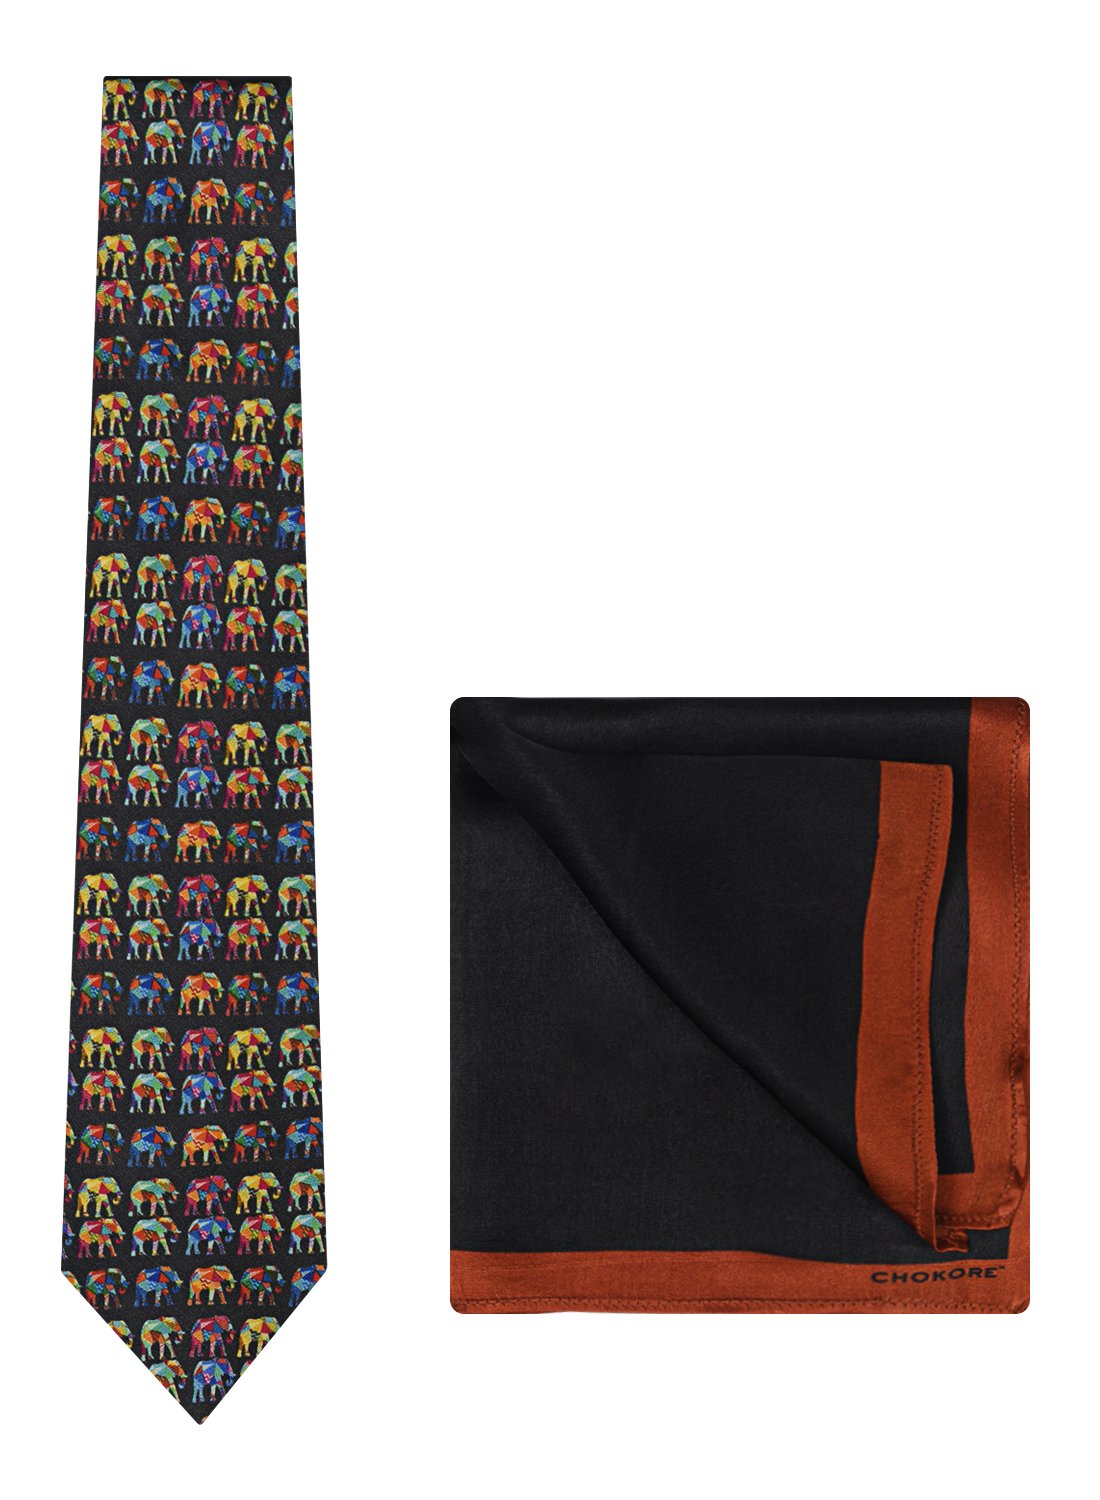 Chokore Multi-colour Elephants Silk Tie - Wildlife range & Printed Pure Silk Pocket Square set